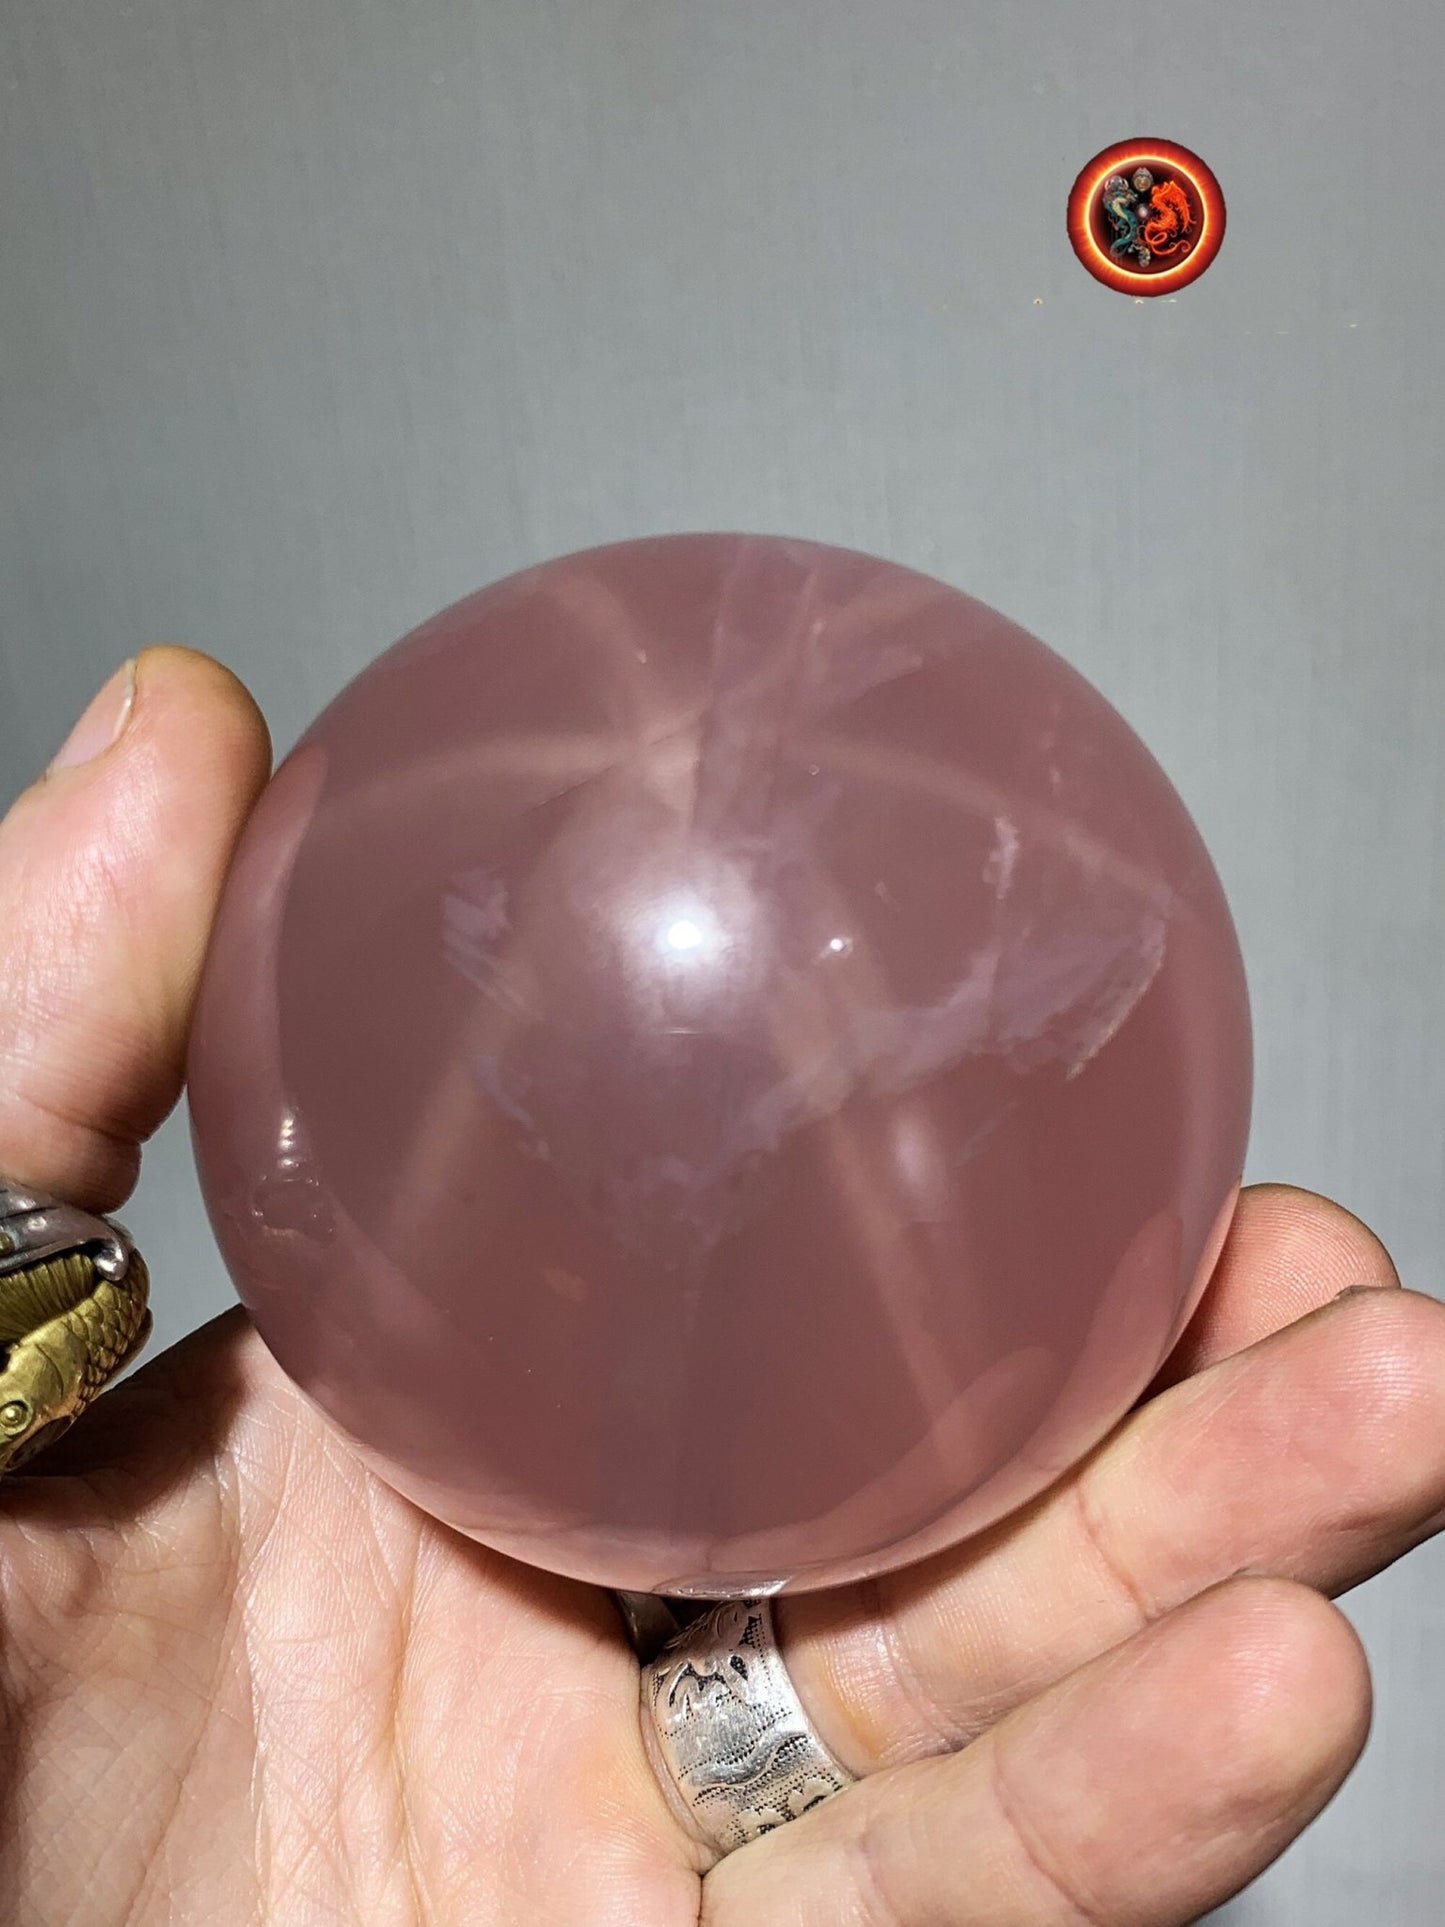 Sphère, quartz rose étoilé, quartz rose astérié ou quartz rose astérisé. Provenance du Mozambique. quartz rose naturel. 77mm de diamètre - obsidian dragon